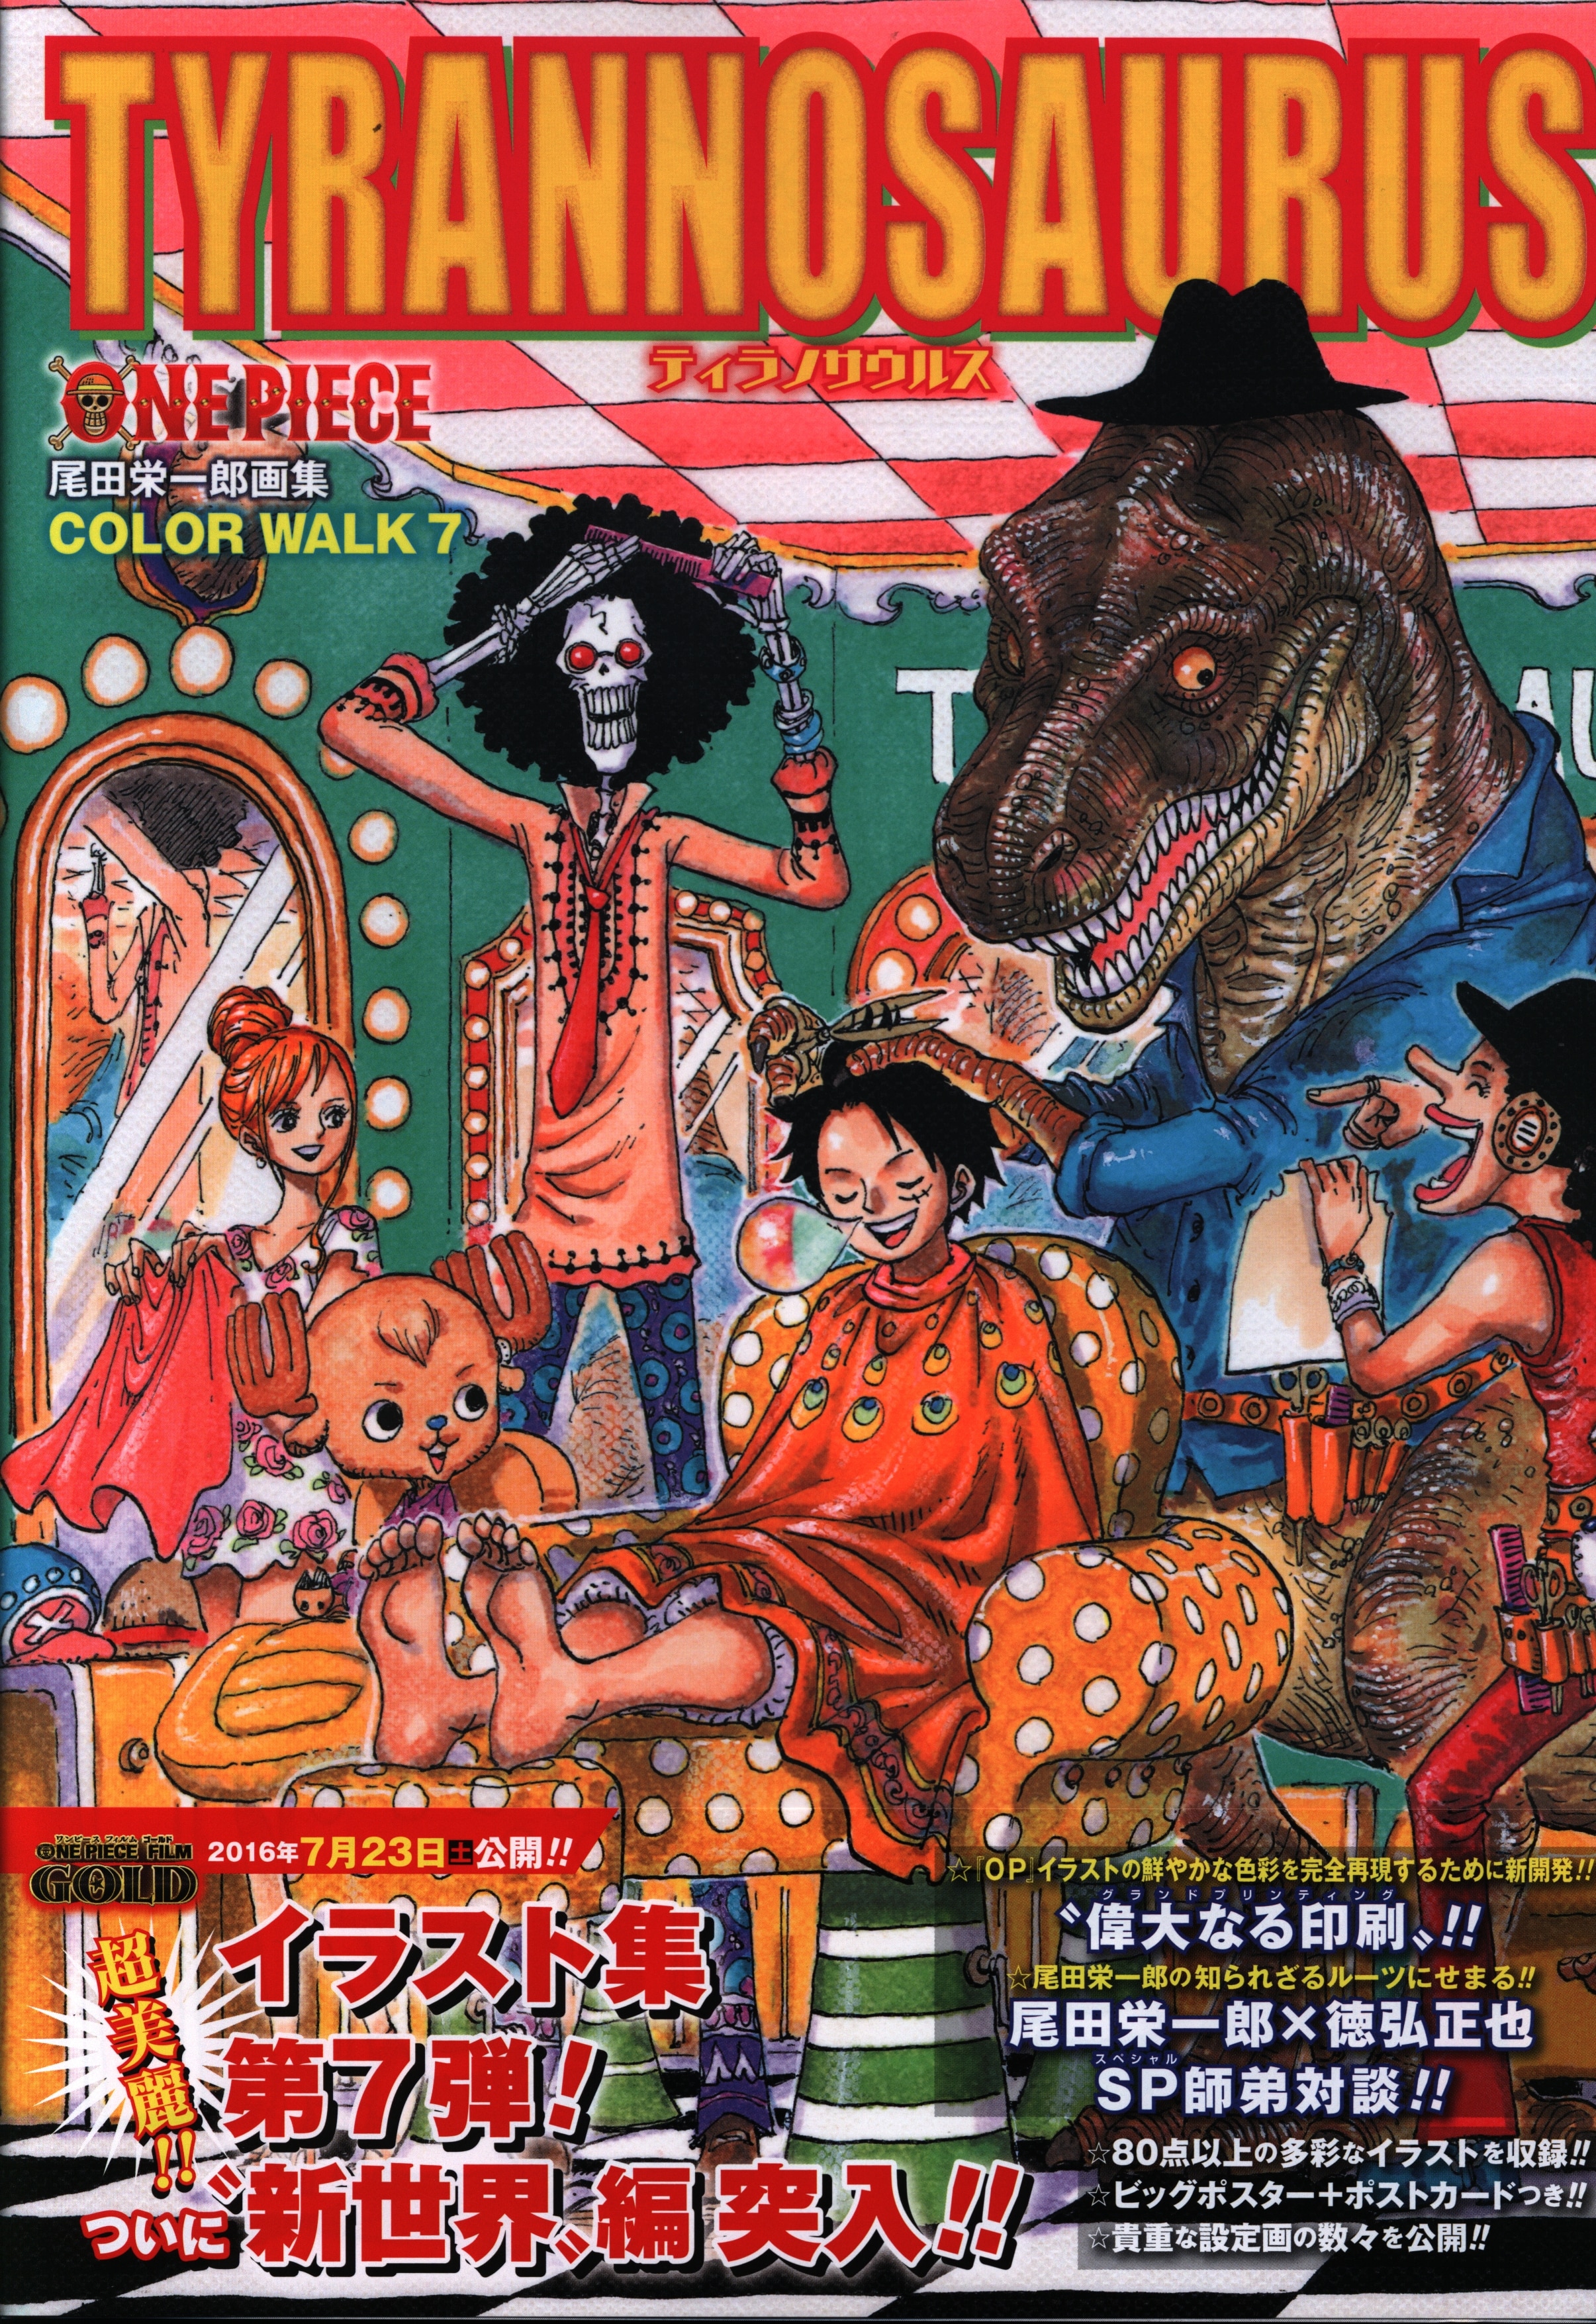 Mandarake Shueisha Ei Eiichiro Oda One Piece Color Walk 7 With Obi